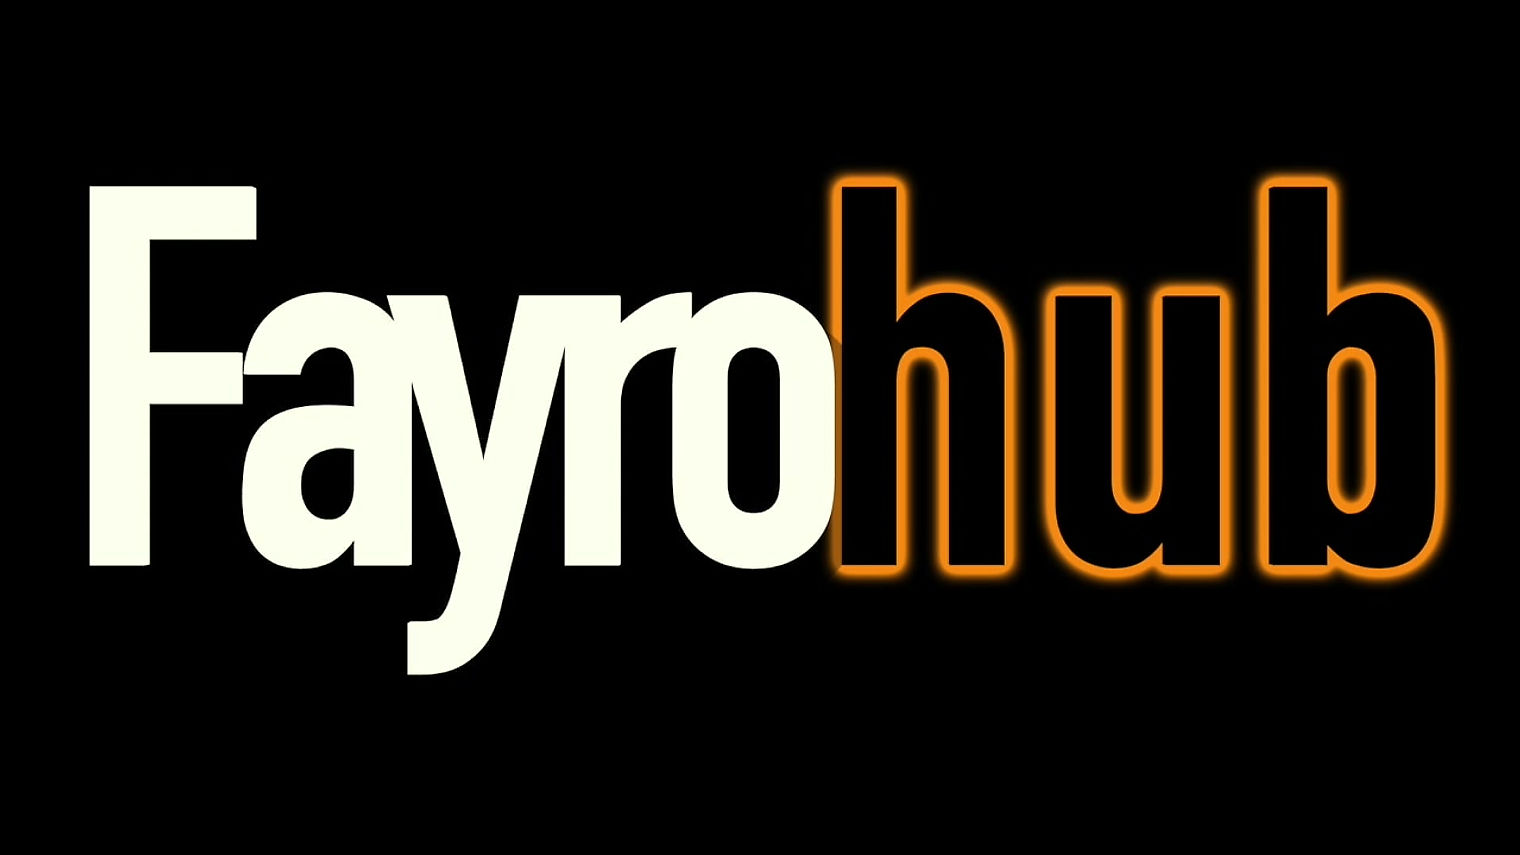 FAYRO HUB